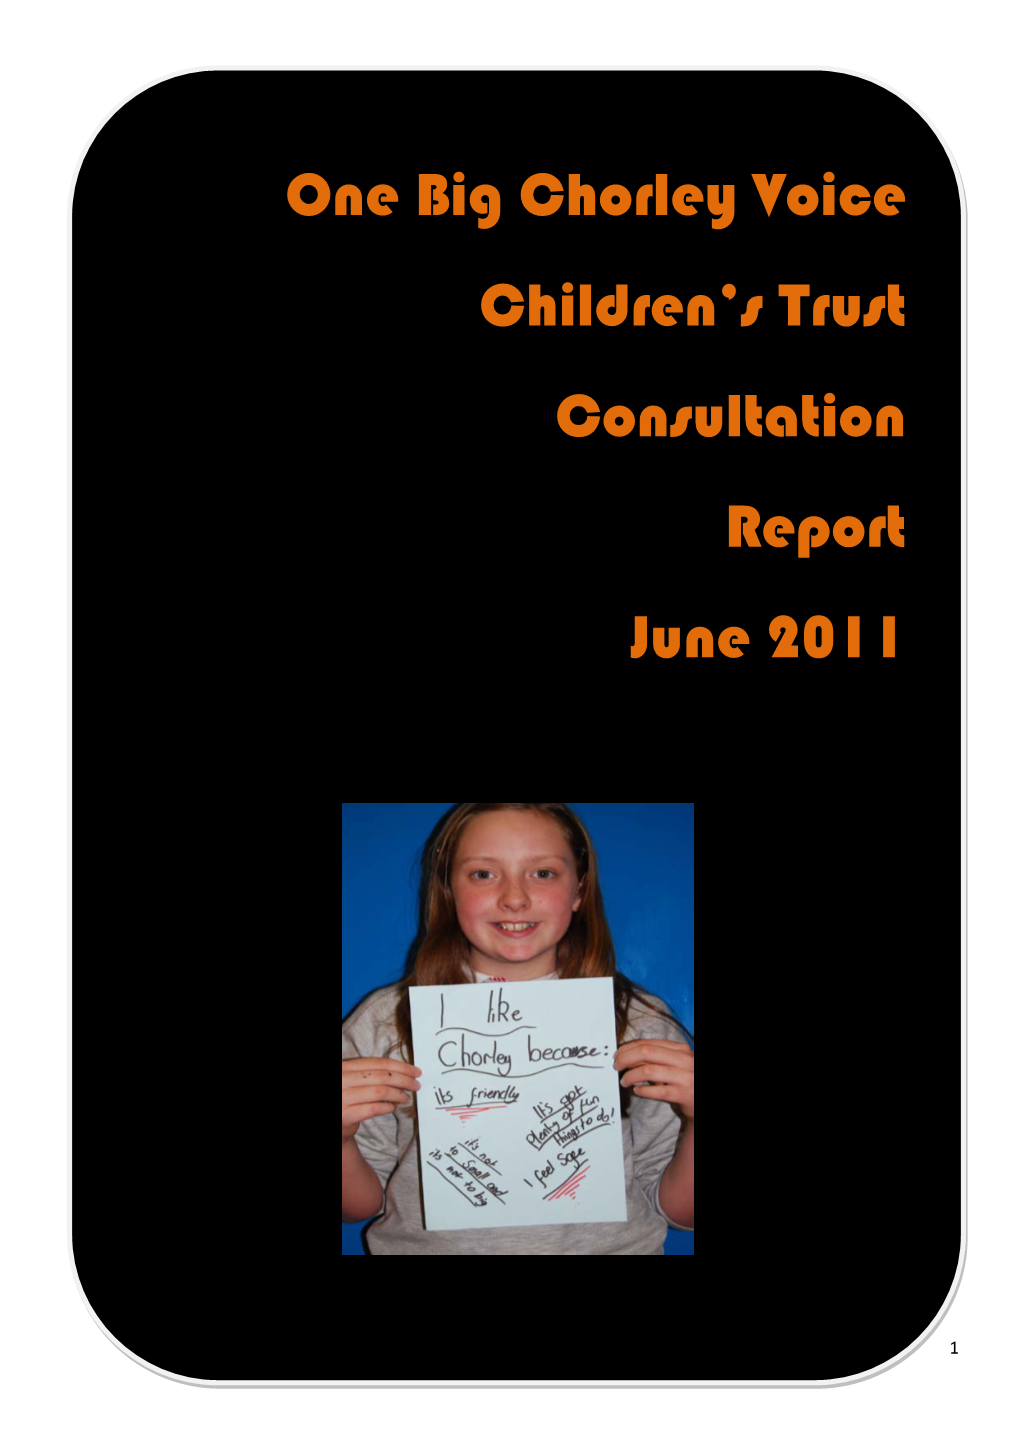 One Big Chorley Voice Children's Trust Consultation Report June 2011